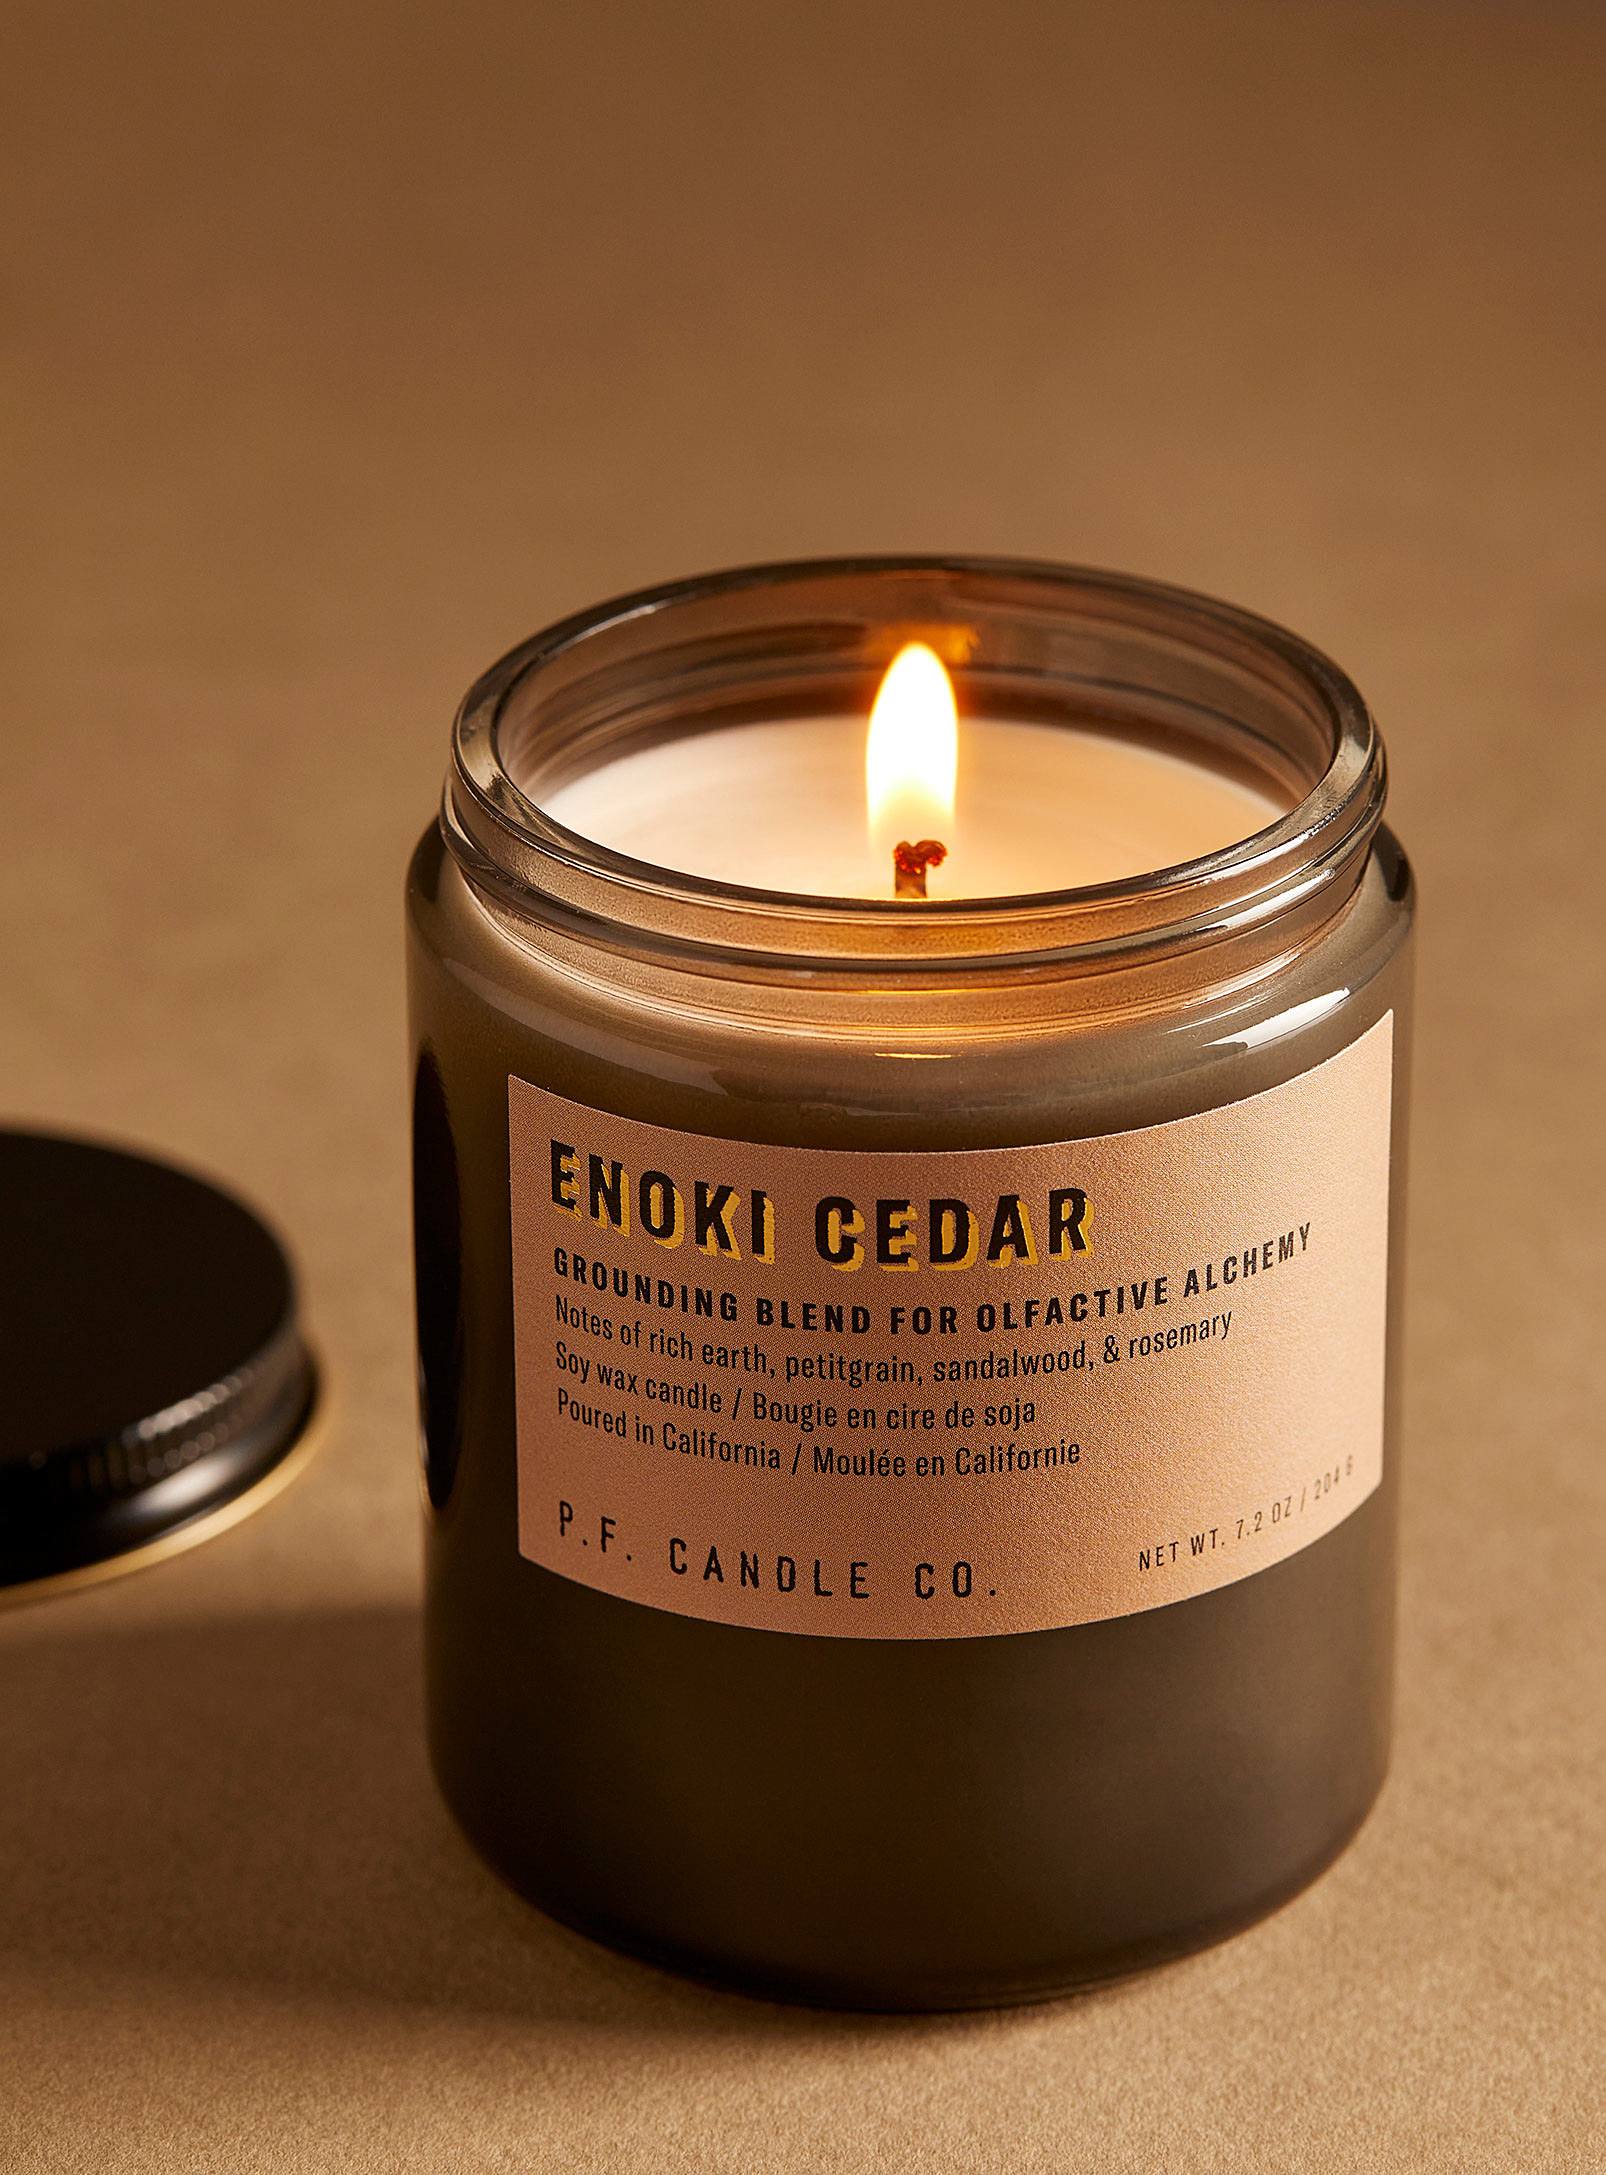 P.f Candle Co. Enoki Cedar Candle In Light Brown